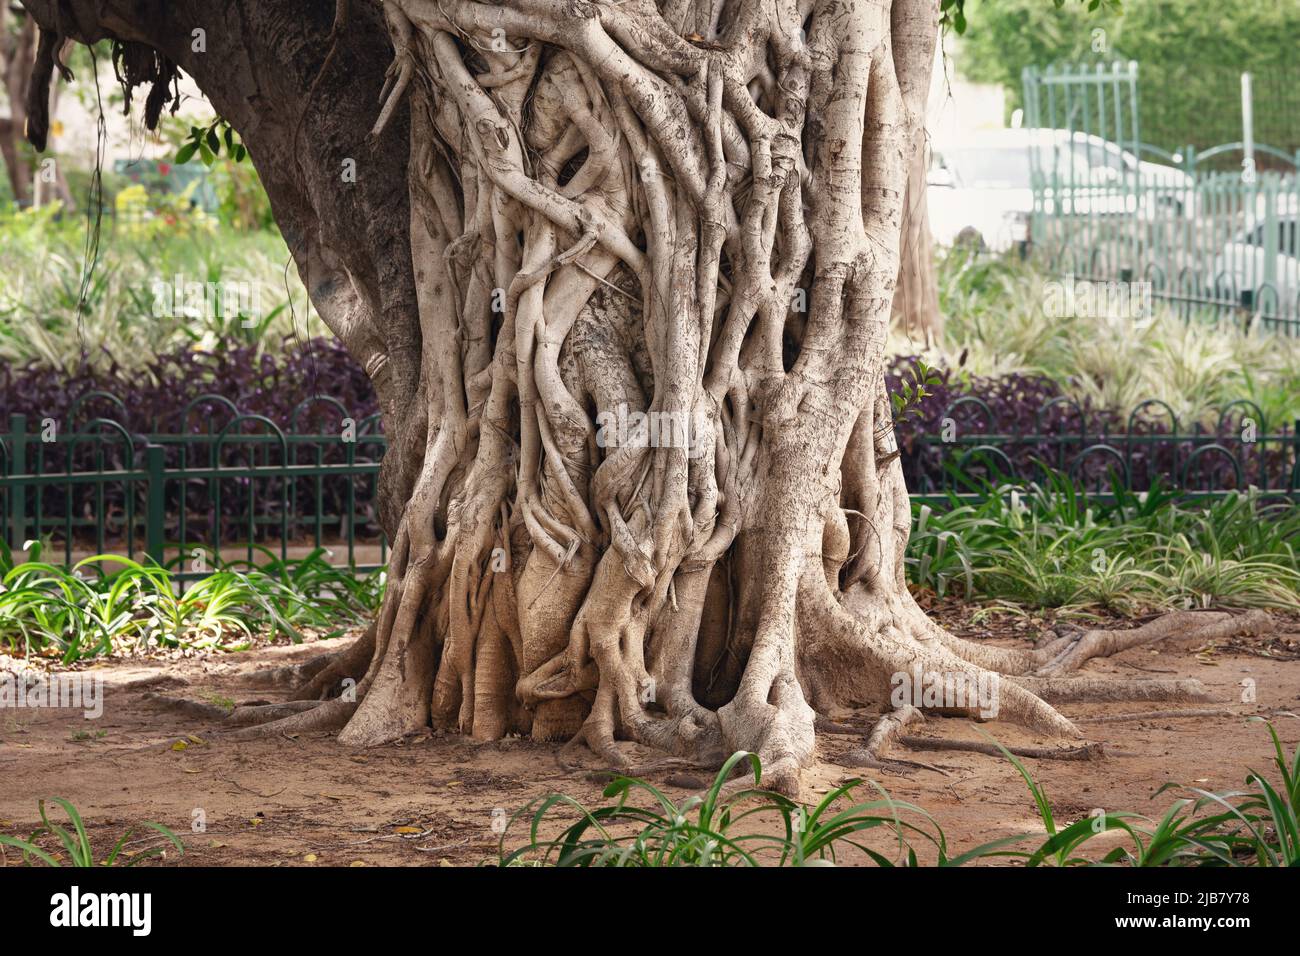 Strange Banyan or ficus tree trunk growing on israeli town street Stock Photo